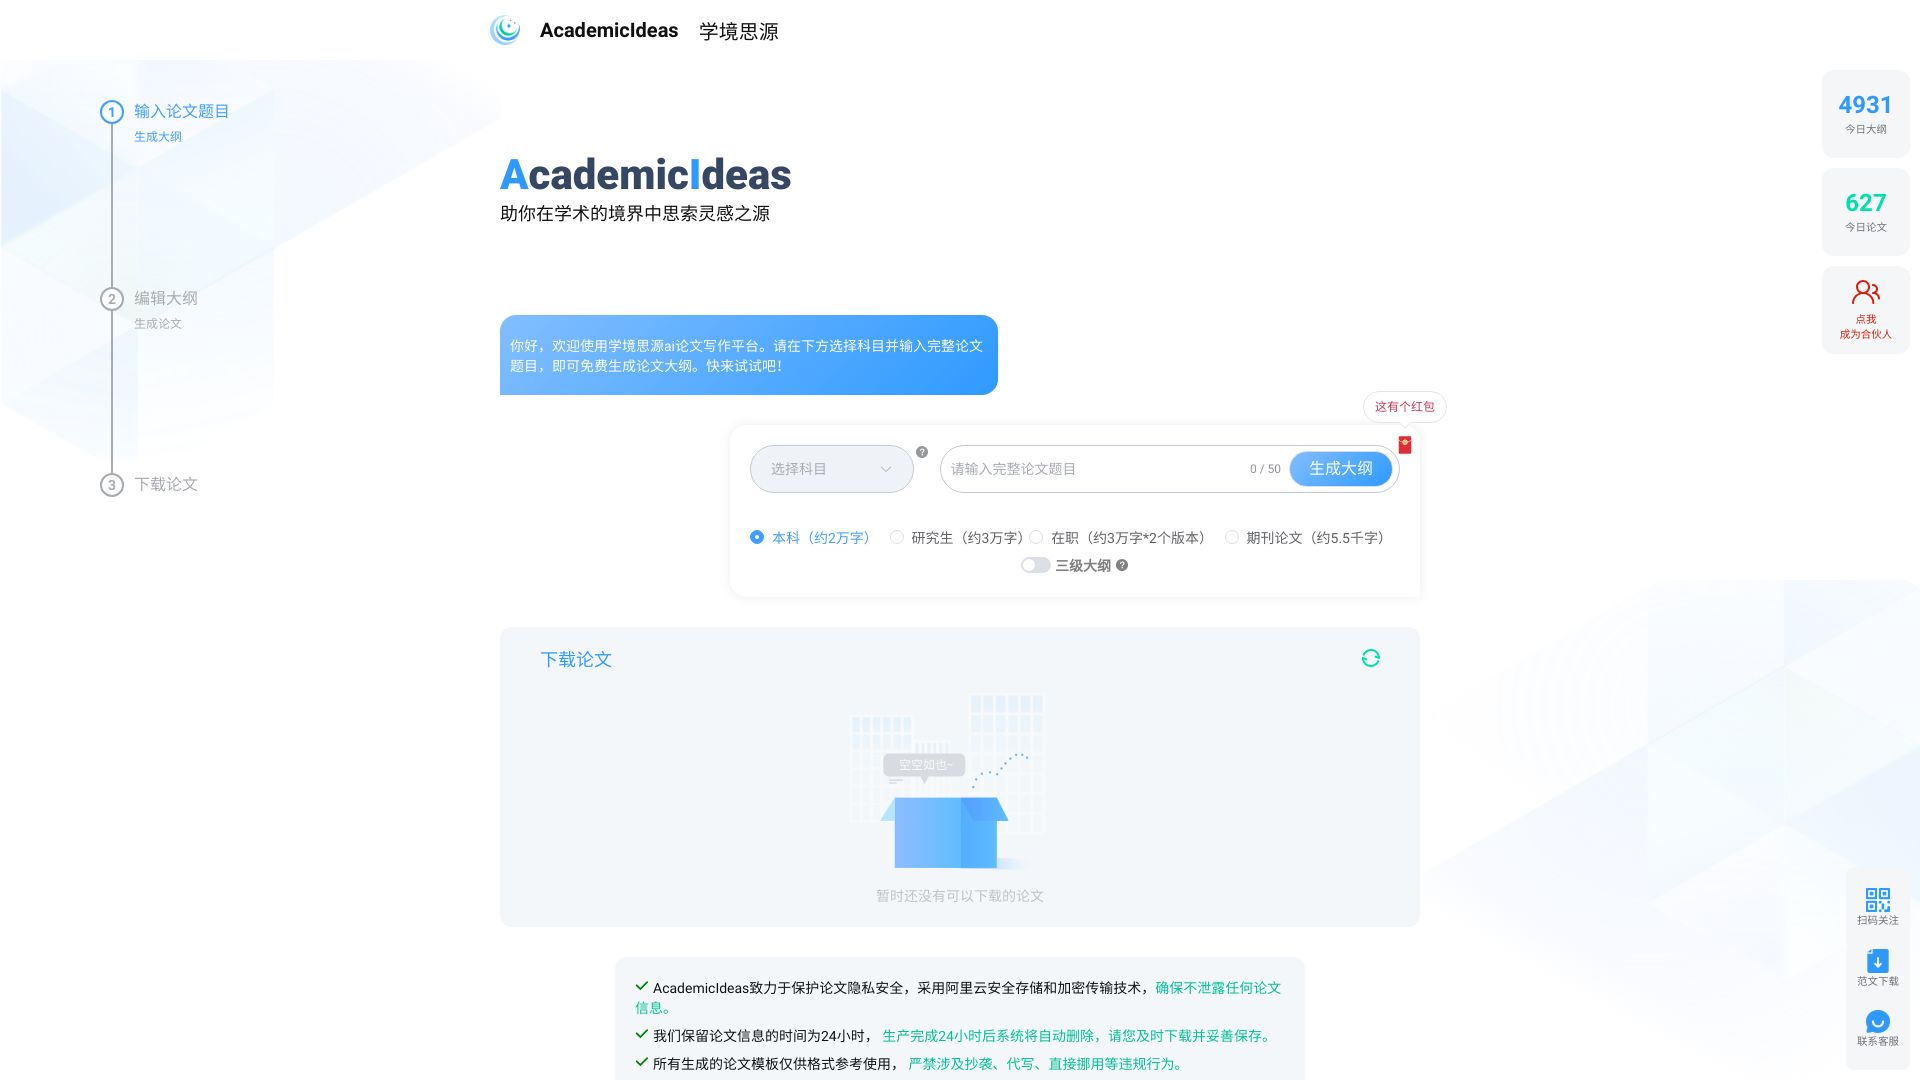 AI 논문 초안 작성 - Xuejingsiyuan